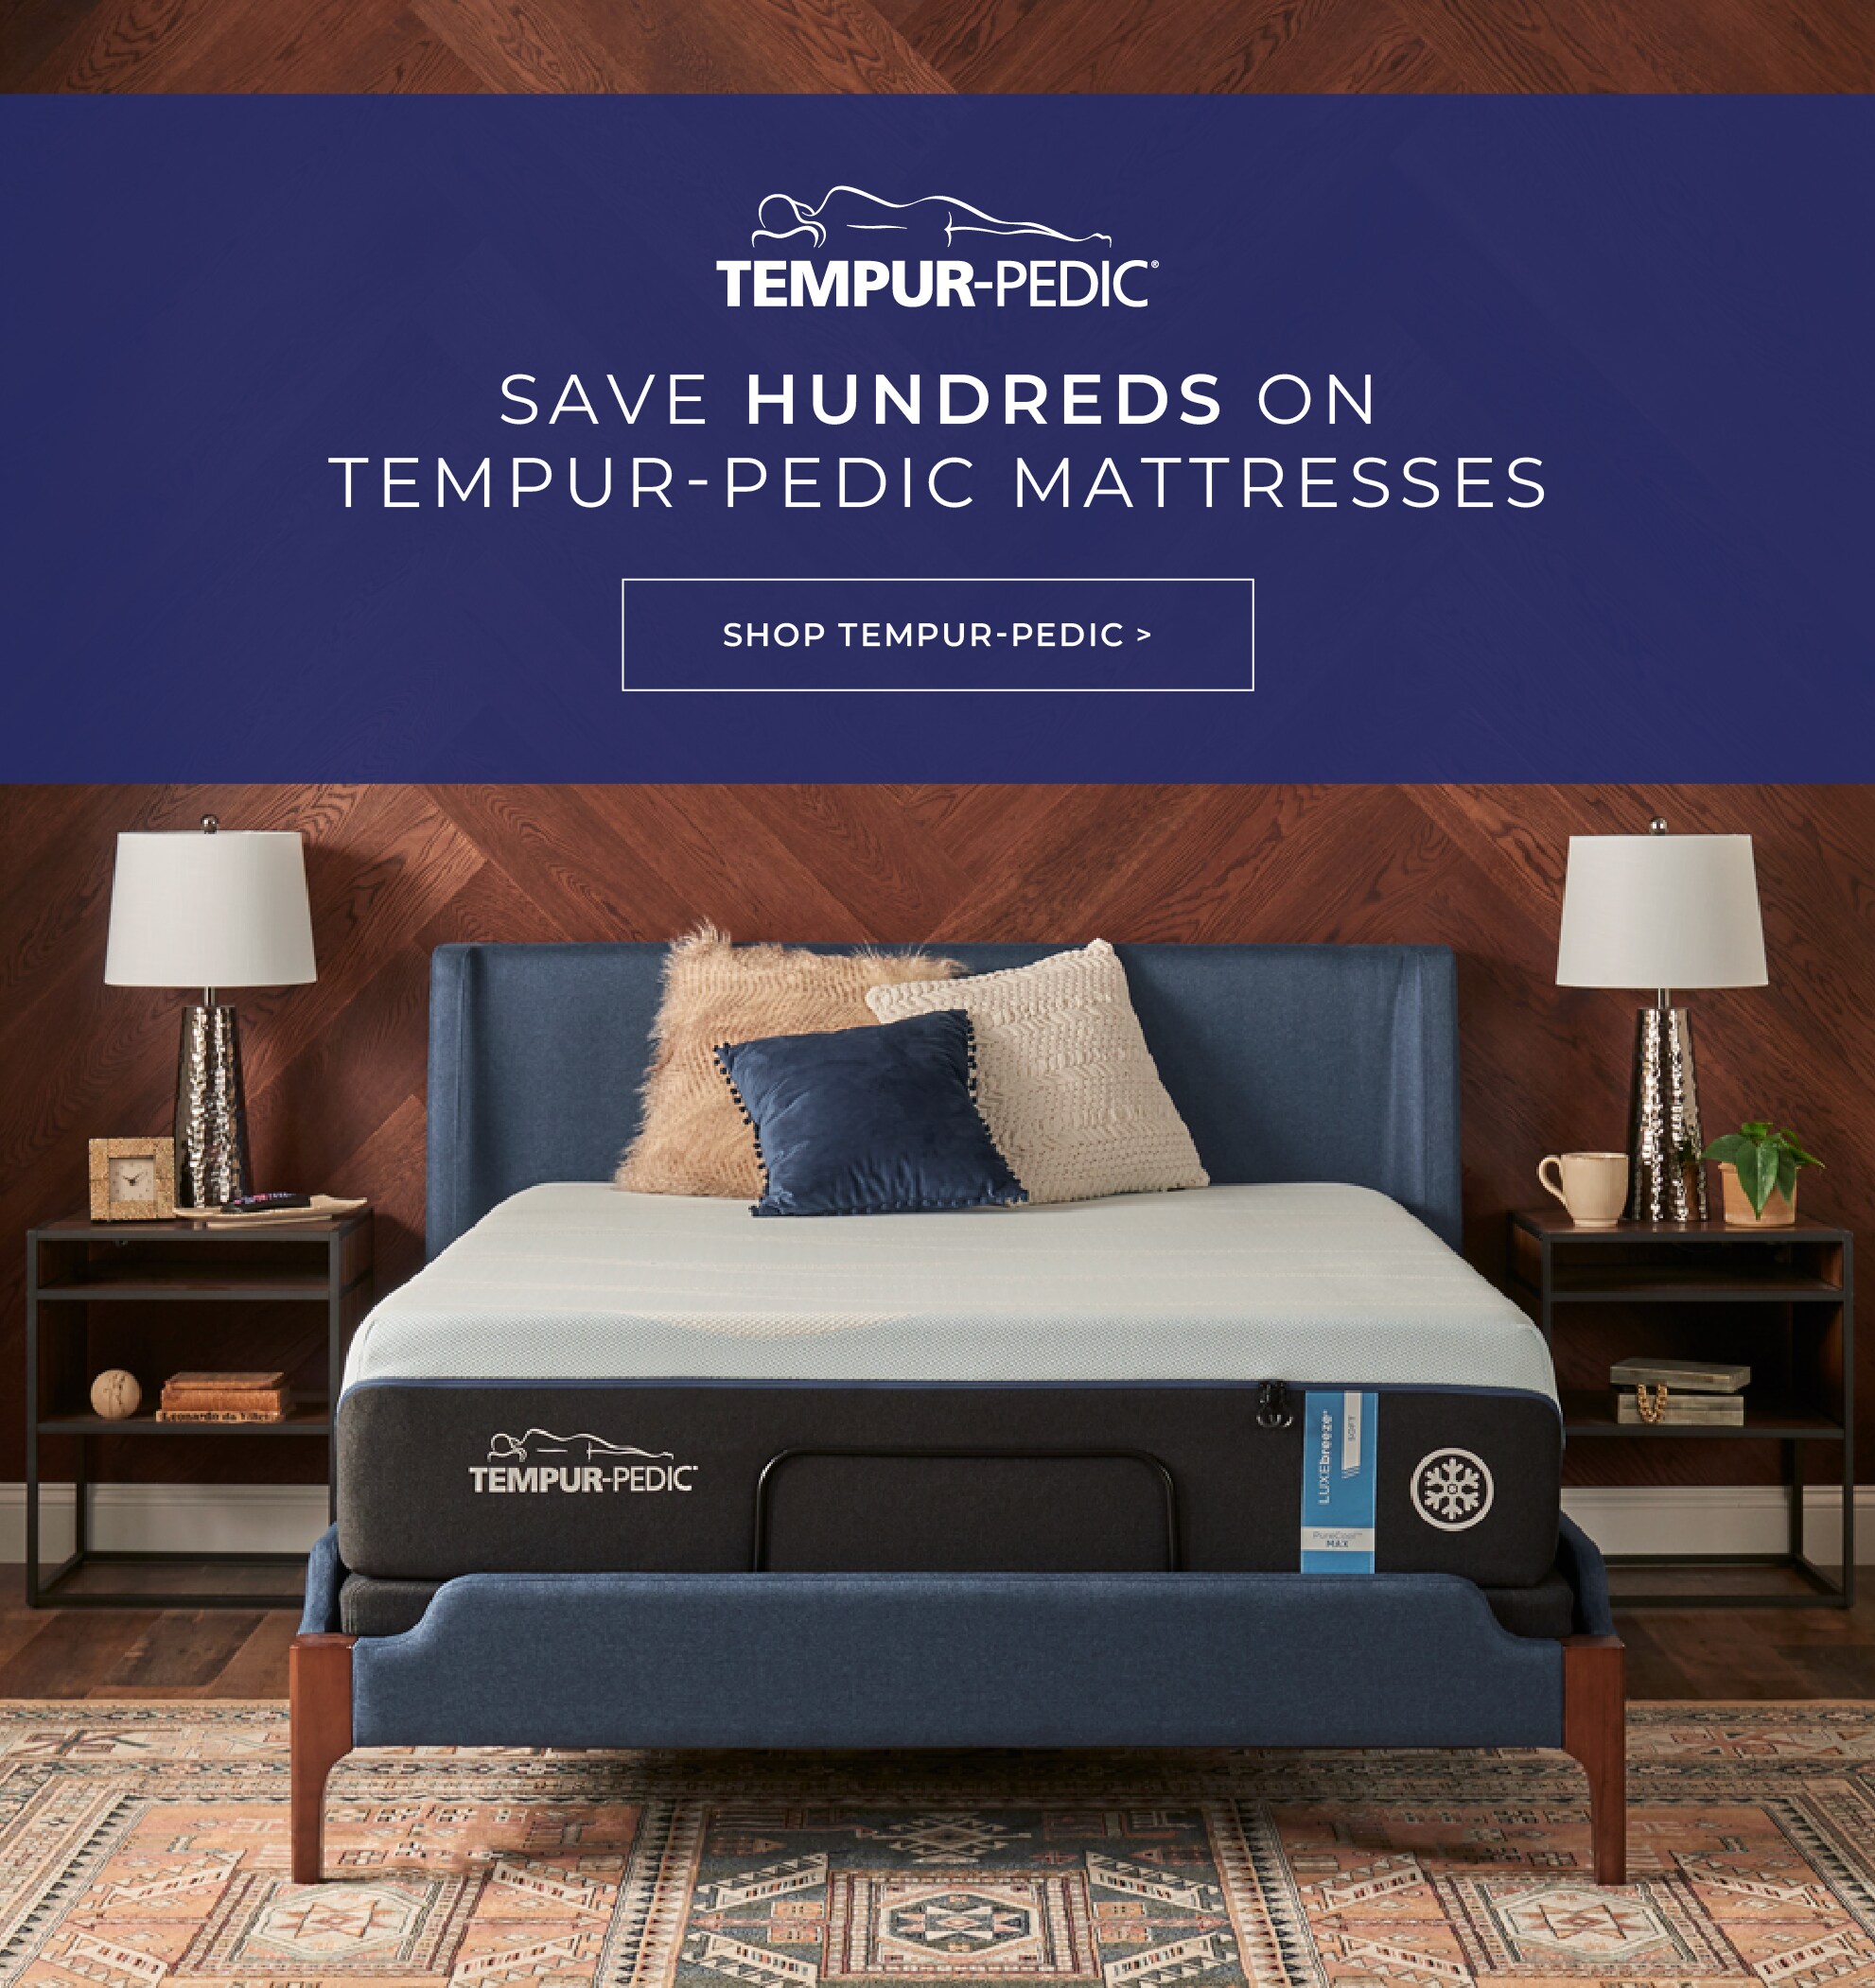 Shop Tempur-pedic mattresses.